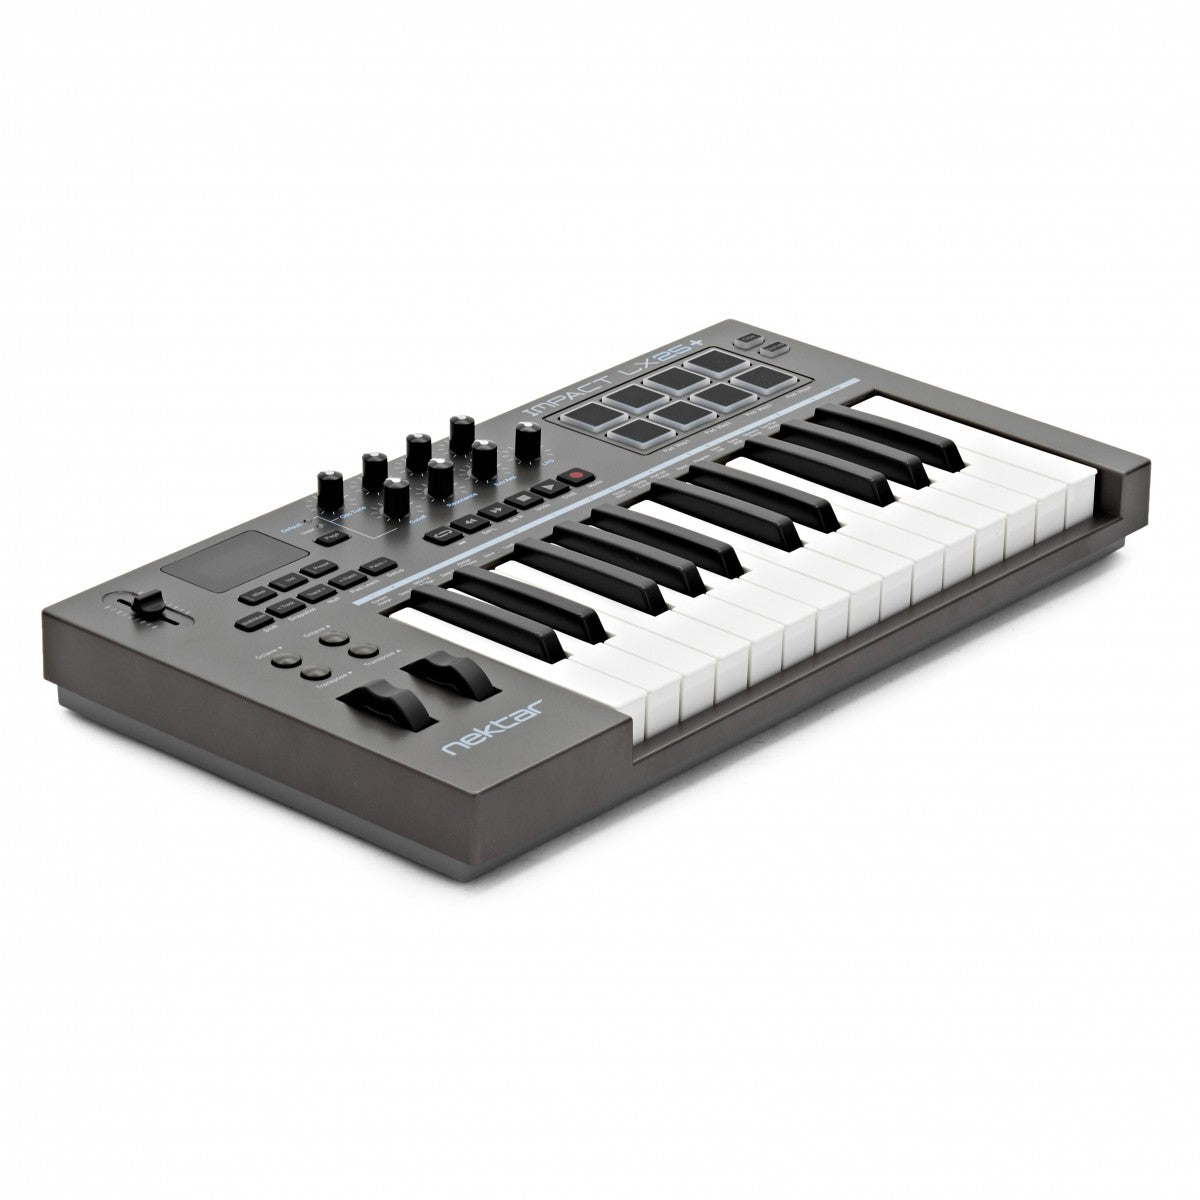 Midi Keyboard Controller Nektar Impact LX25+ - Việt Music